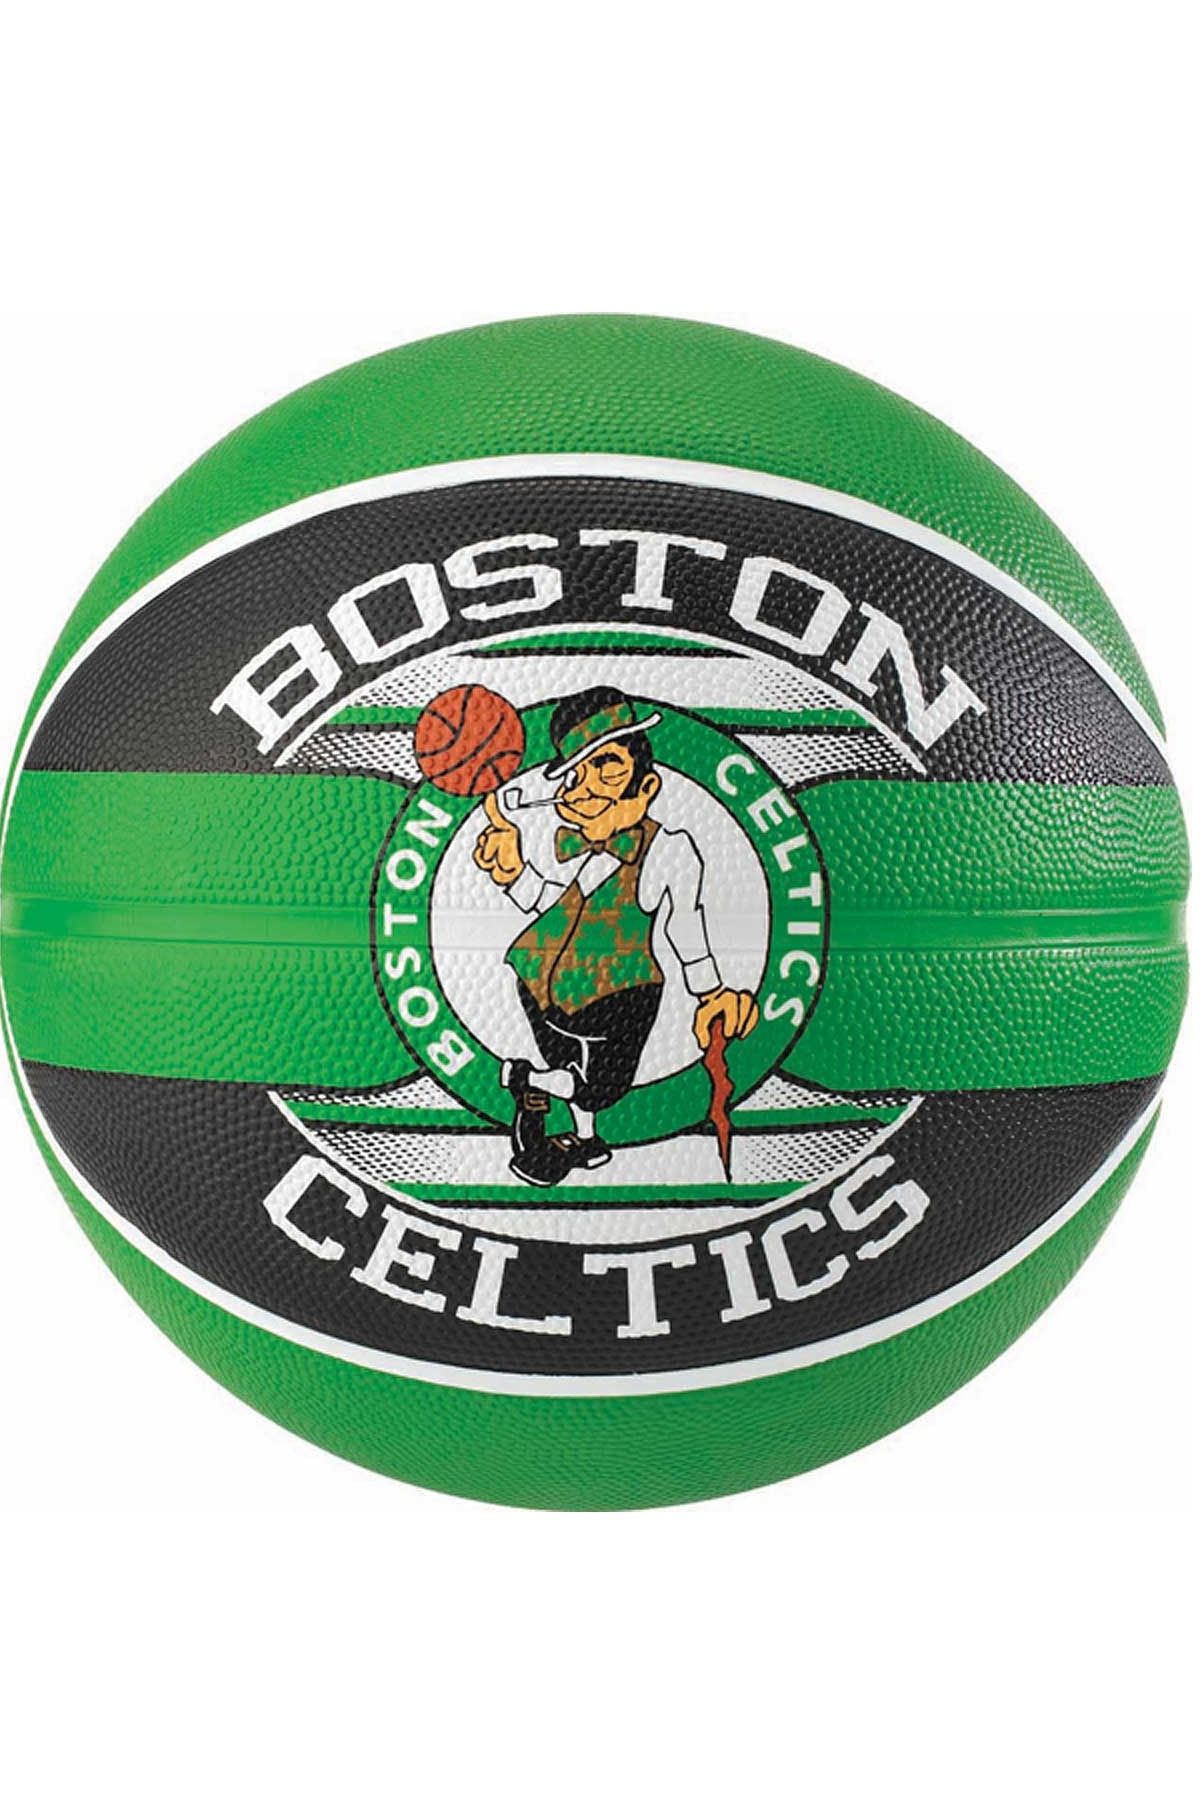 Spalding Sz7 Nba Team Celtics Basketbol Topu